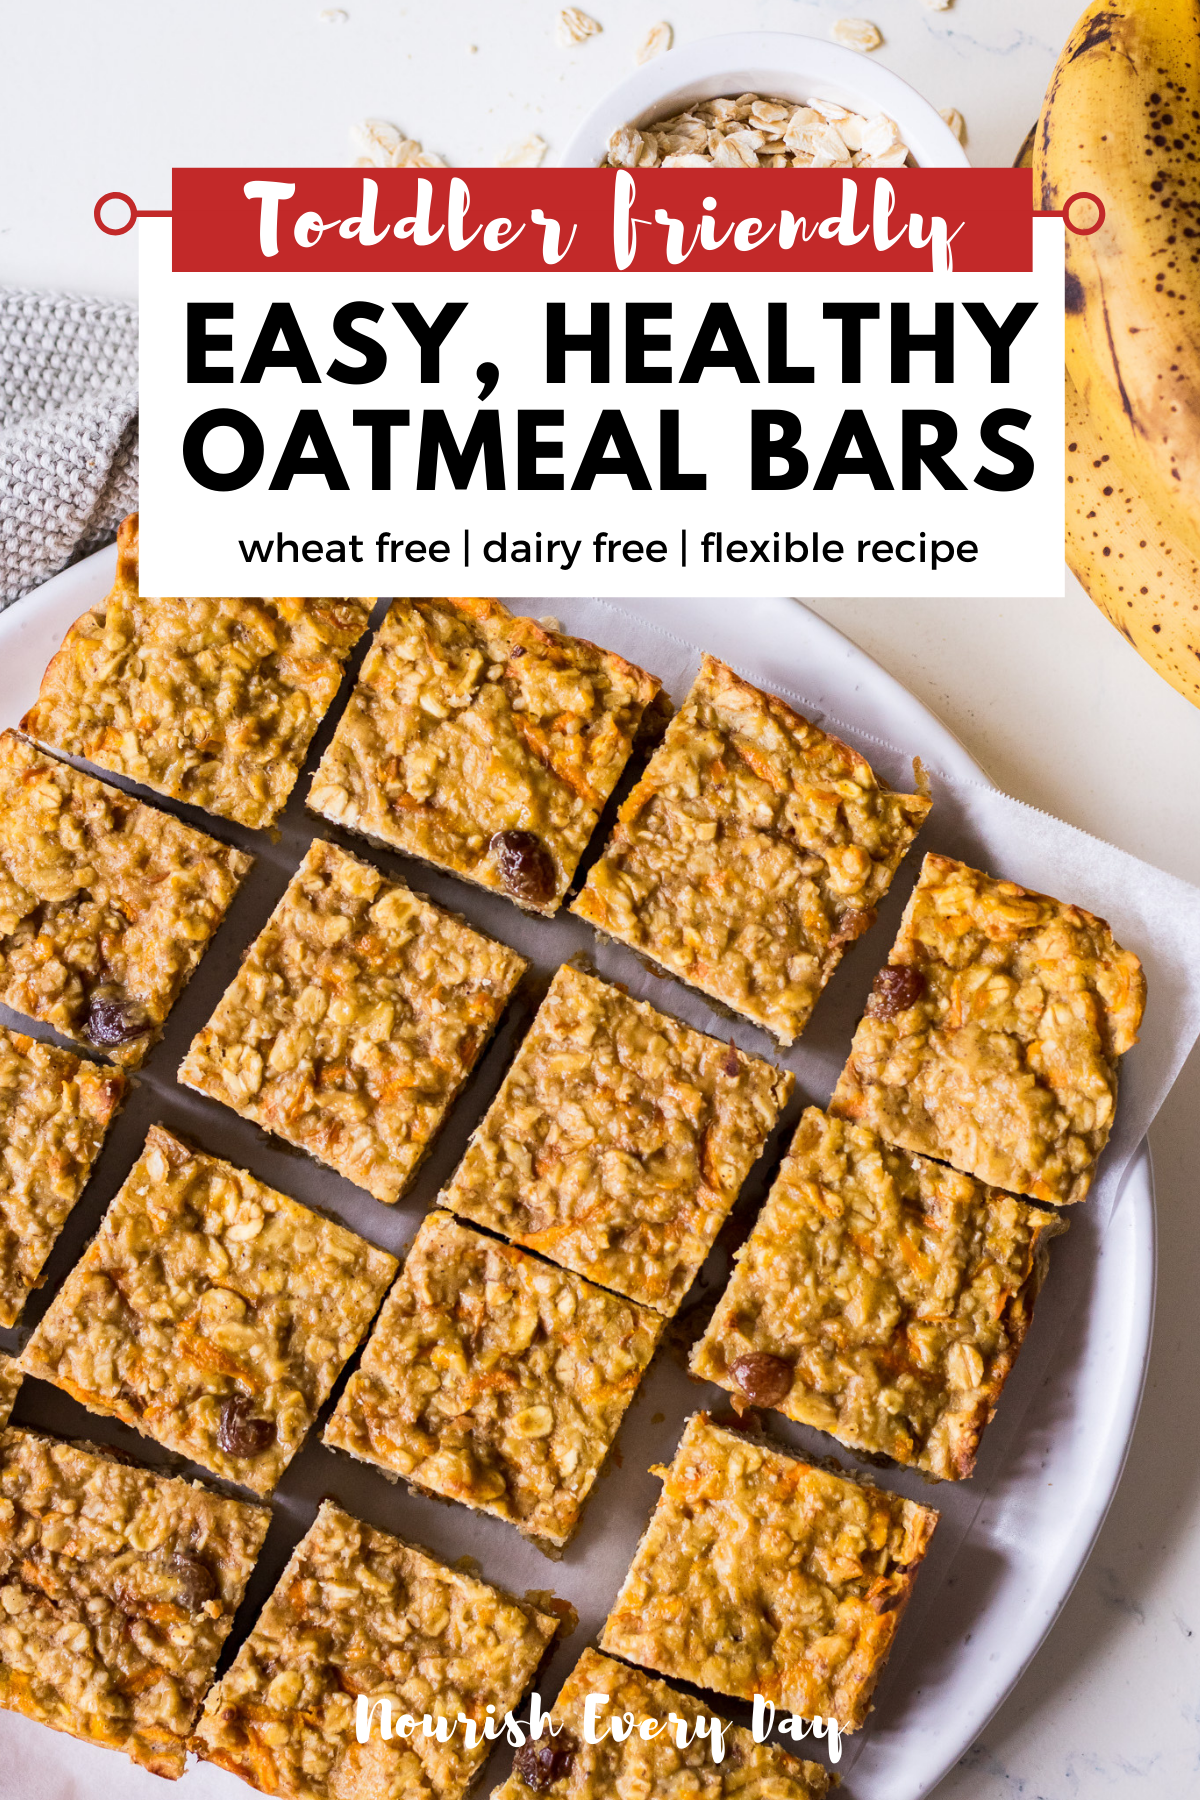 Easy Oatmeal Bars Recipe Pin | Nourish Every Day Blog